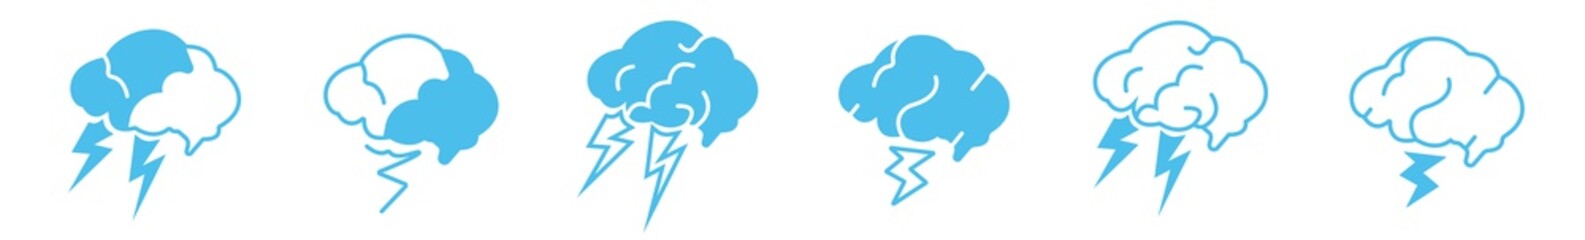 Brainstorming Icon Blue | Brainstorm Illustration | Thinking Symbol | Brain Lightning Logo | Creative Idea Sign | Isolated | Variations